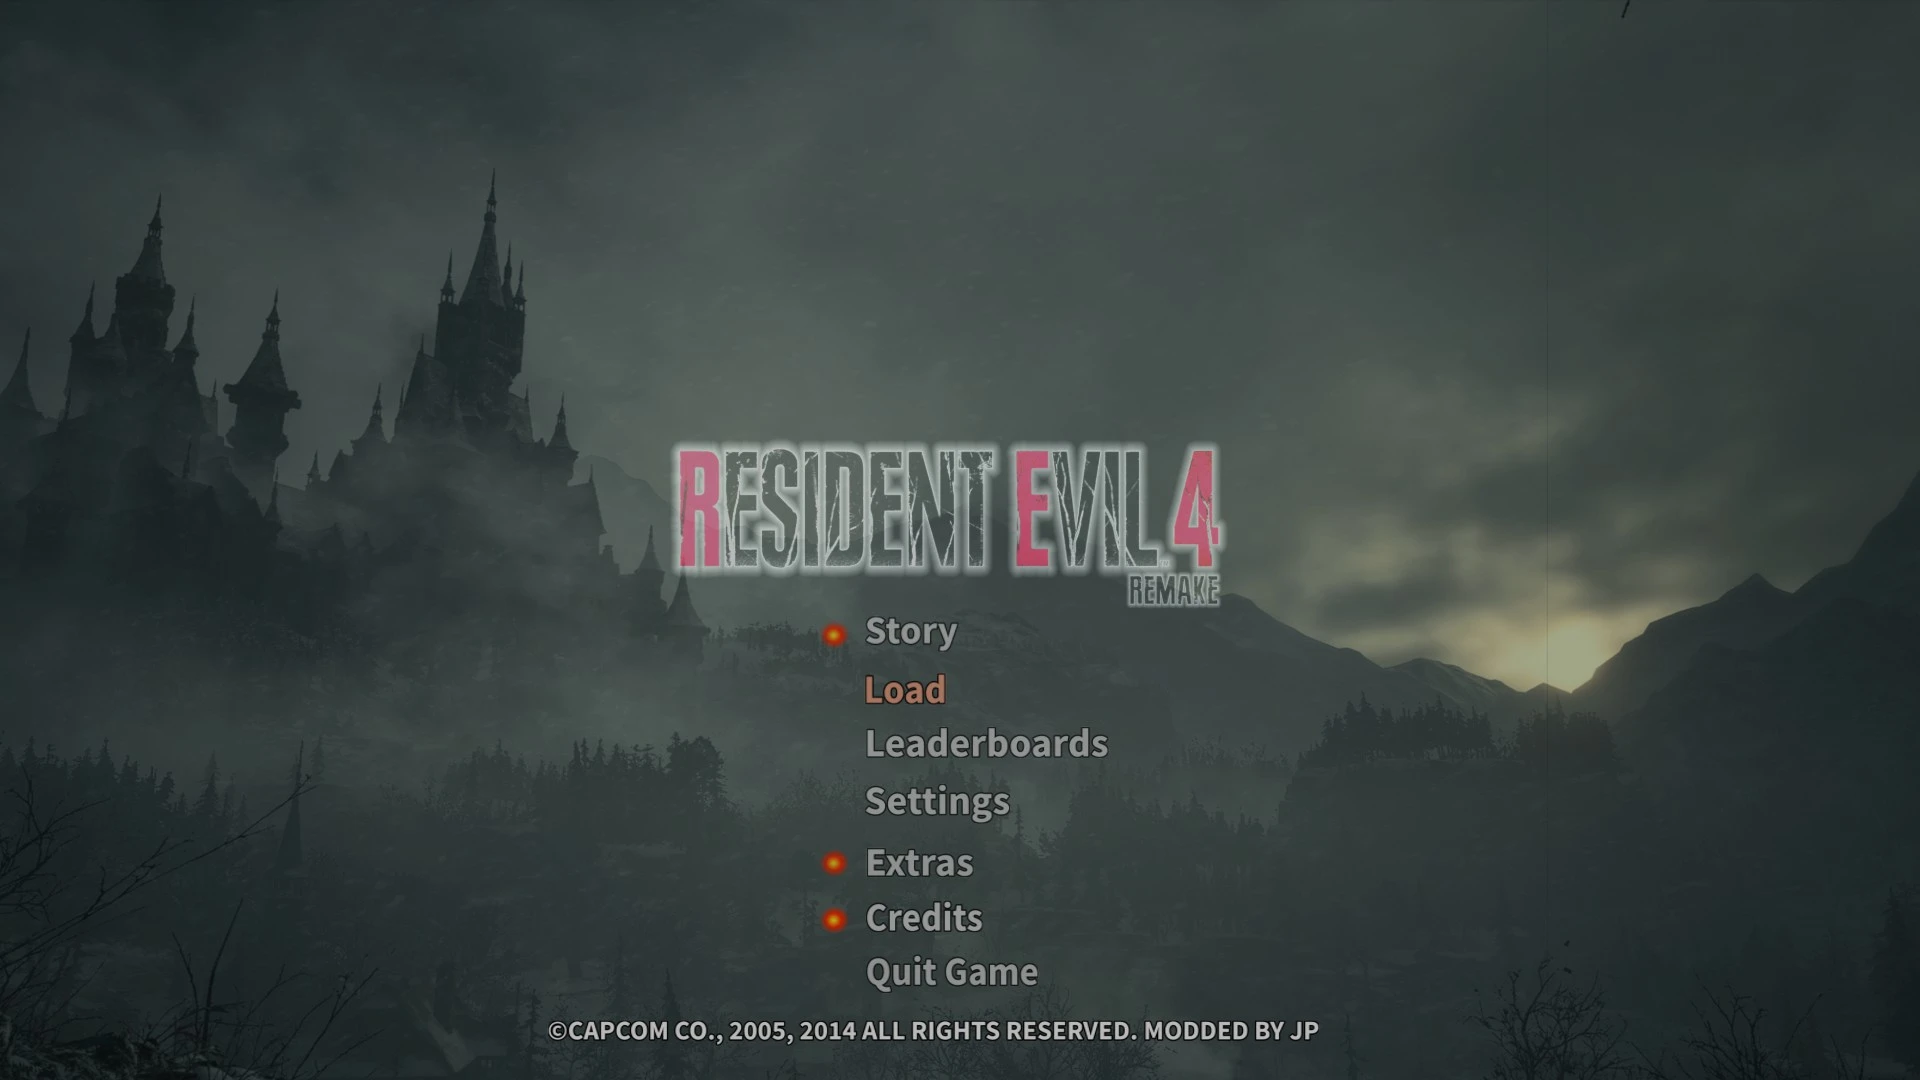 RESIDENT EVIL 4 REMAKE at Resident Evil 4 Nexus - Mods and community